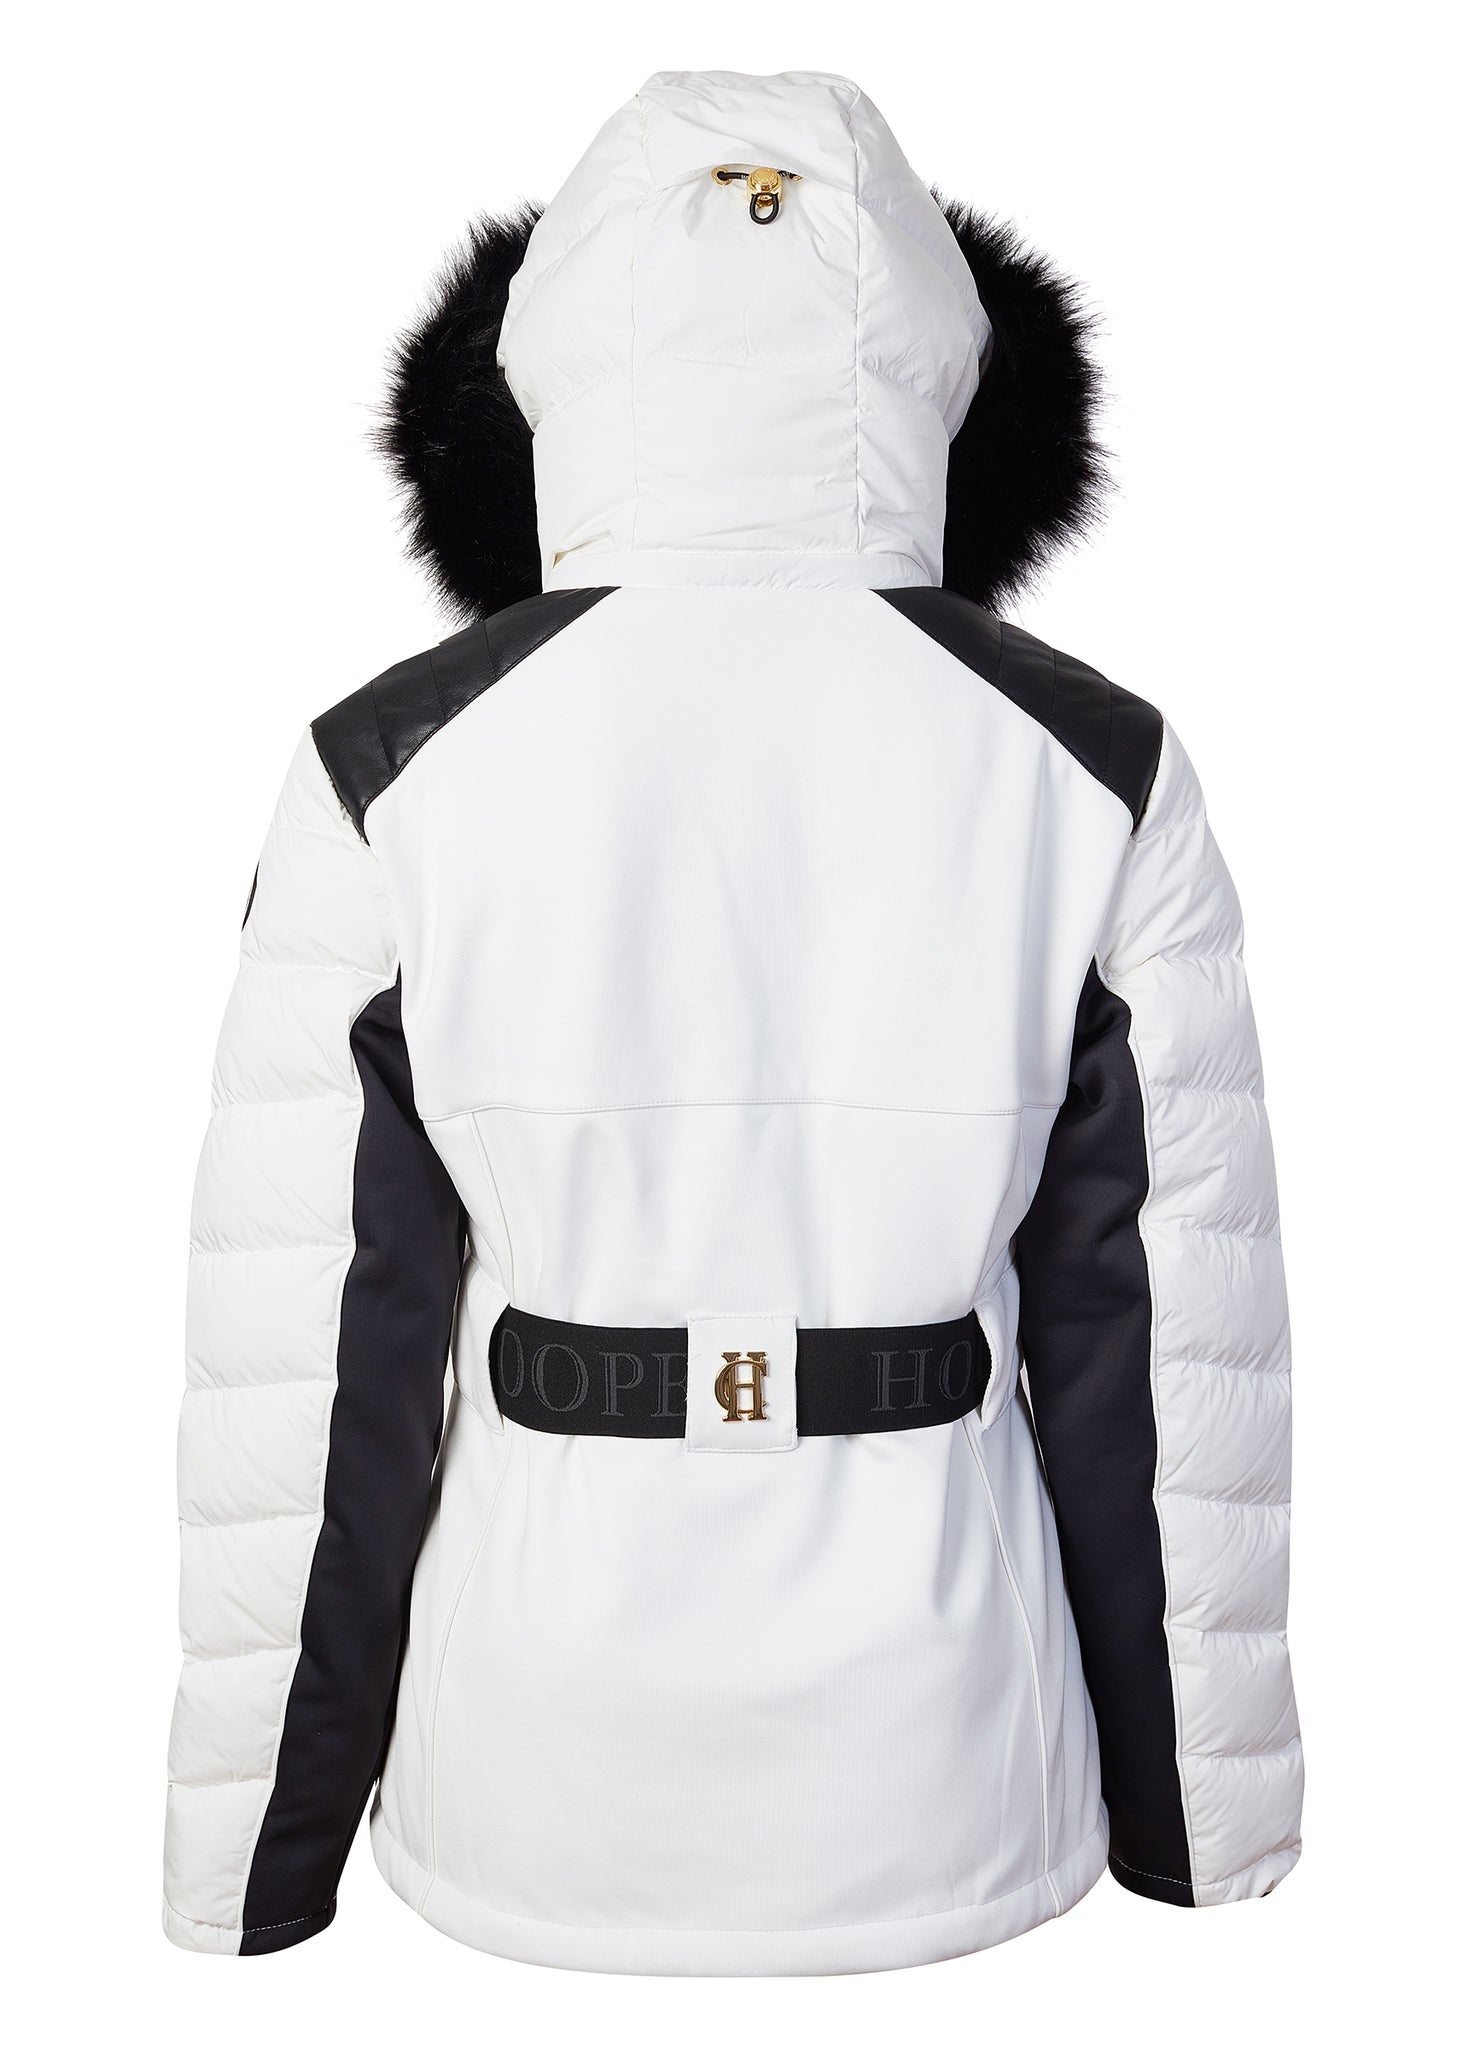 Ski Jacket (White)